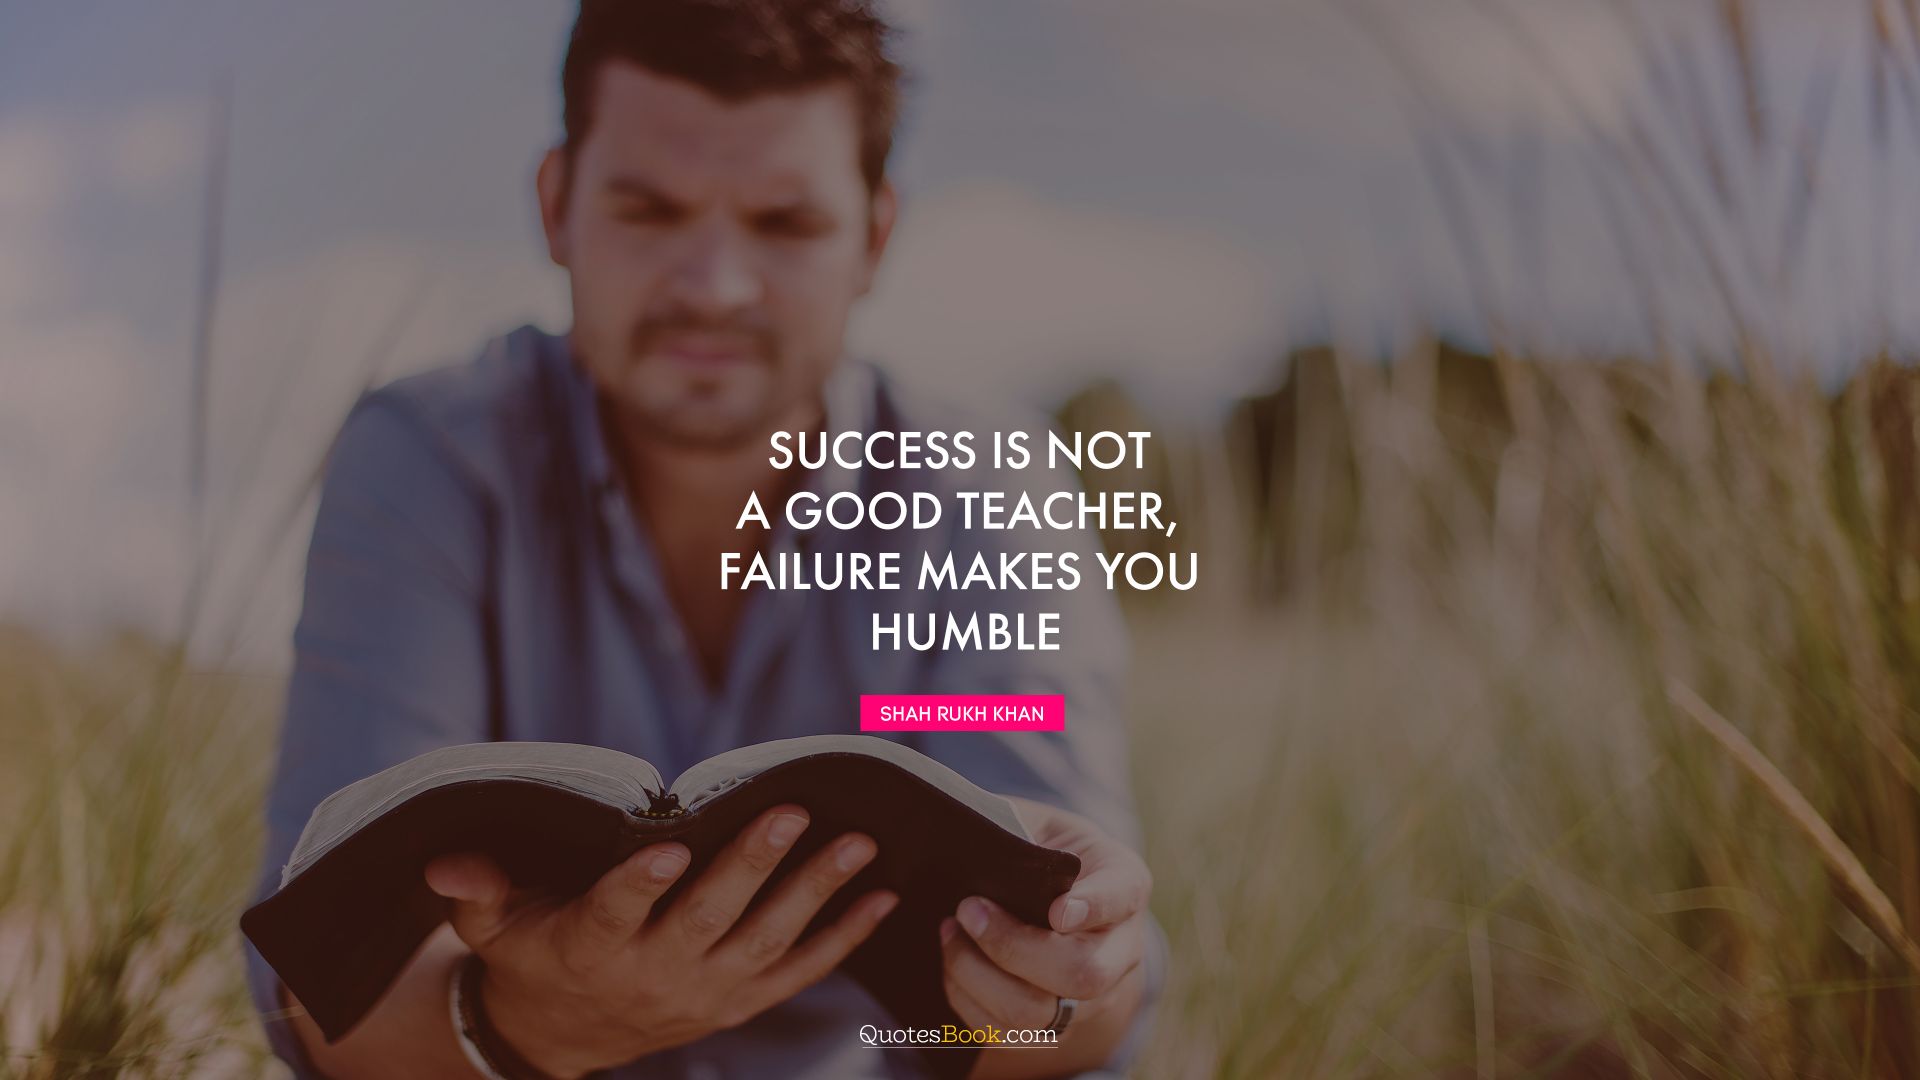 Success is not a good teacher, failure makes you humble. - Quote by Shah Rukh Khan